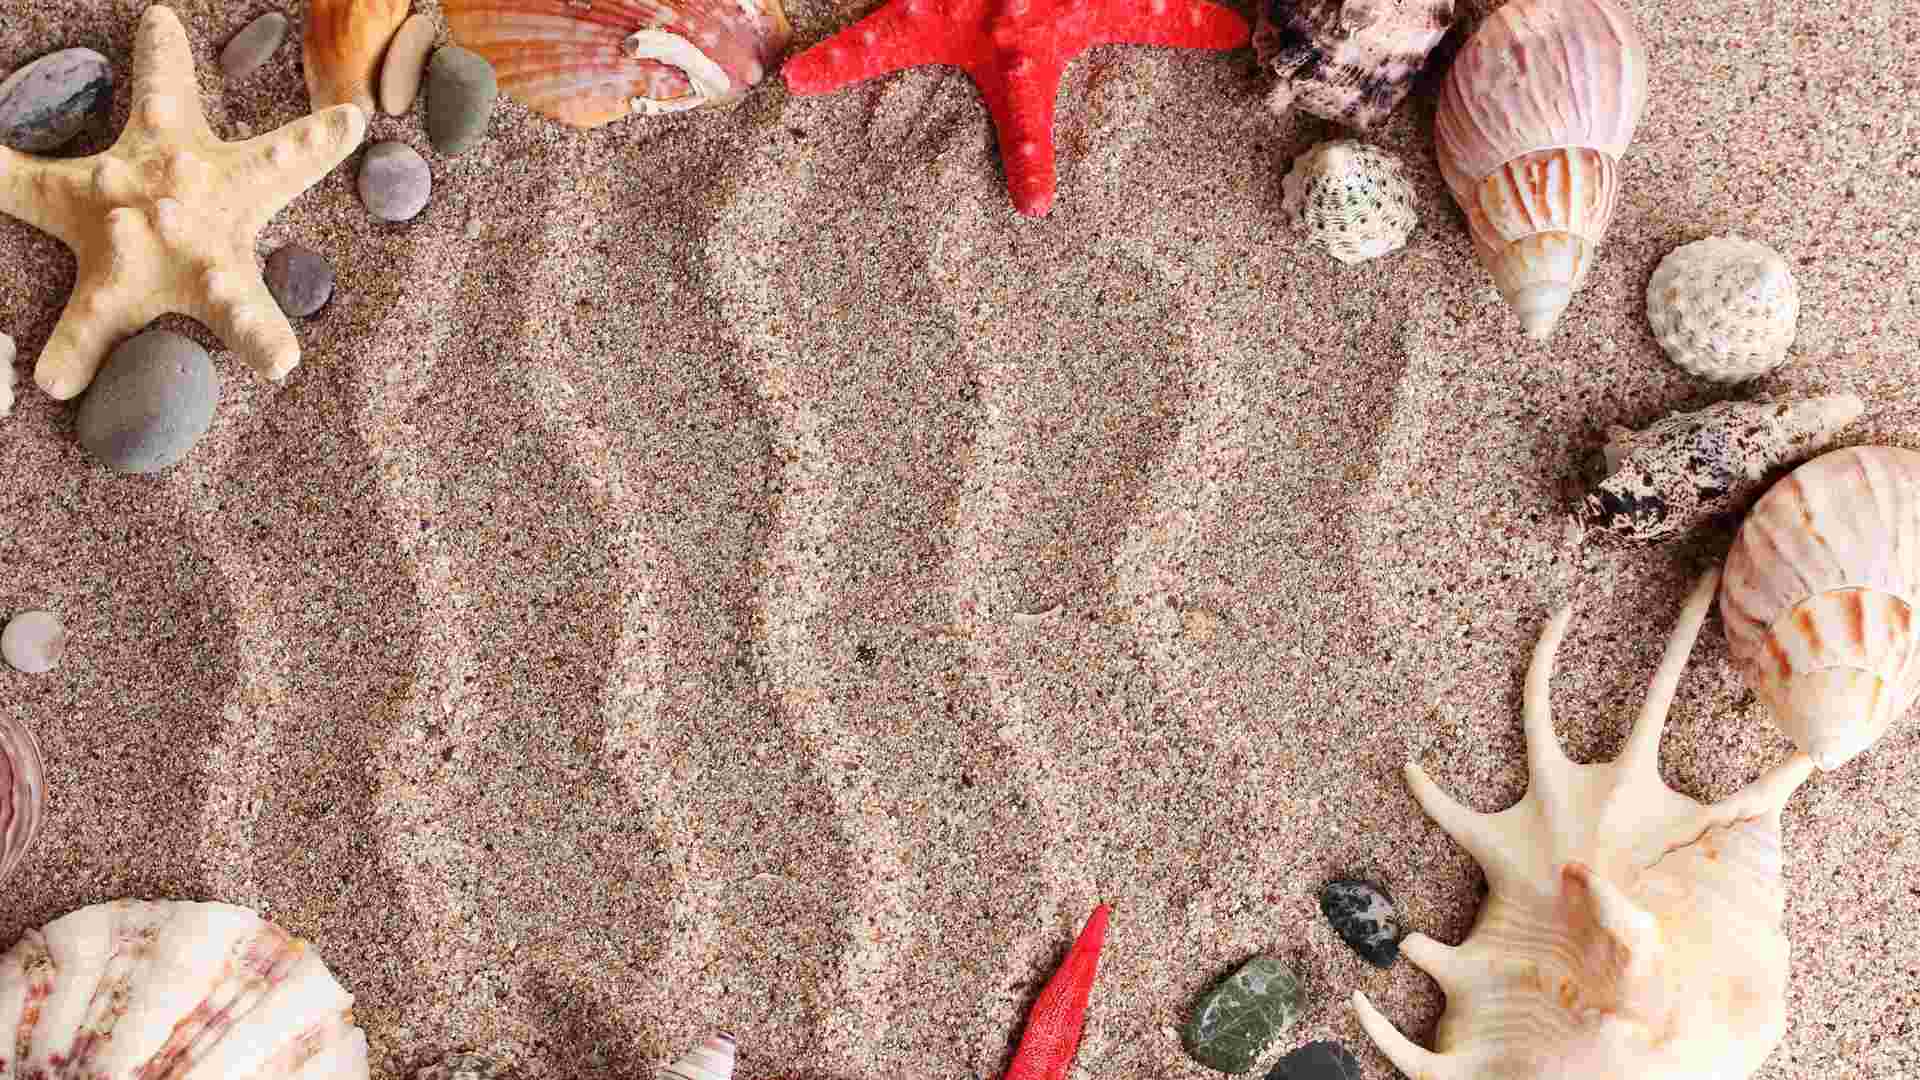 Seashell Wallpapers - Wallpaper Cave